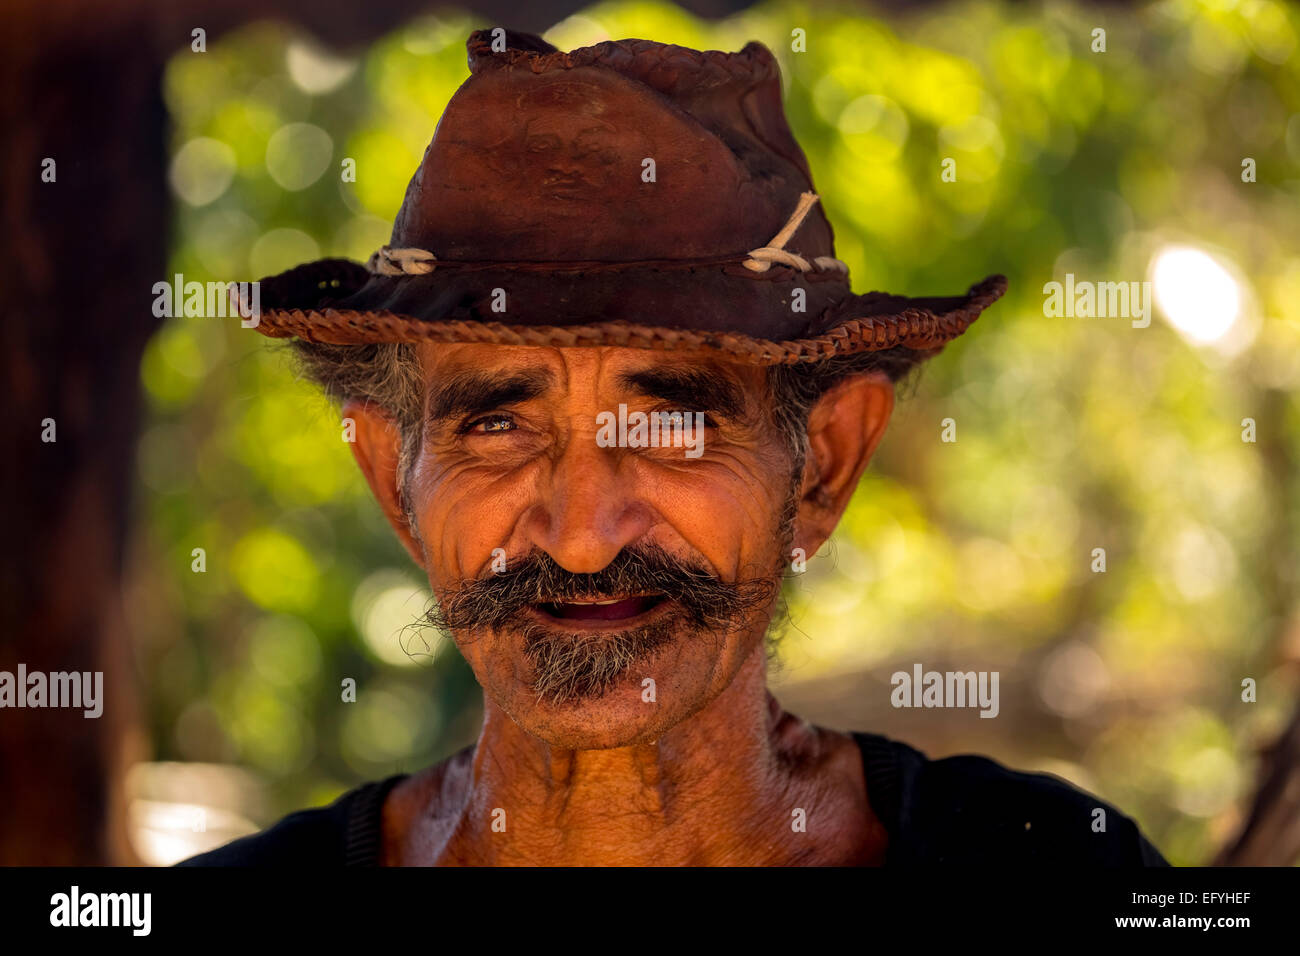 La canna da zucchero agricoltore indossando un cappello, ritratto, la Valle de los Ingenios, Trinidad, Sancti Spiritus Provincia, Cuba Foto Stock